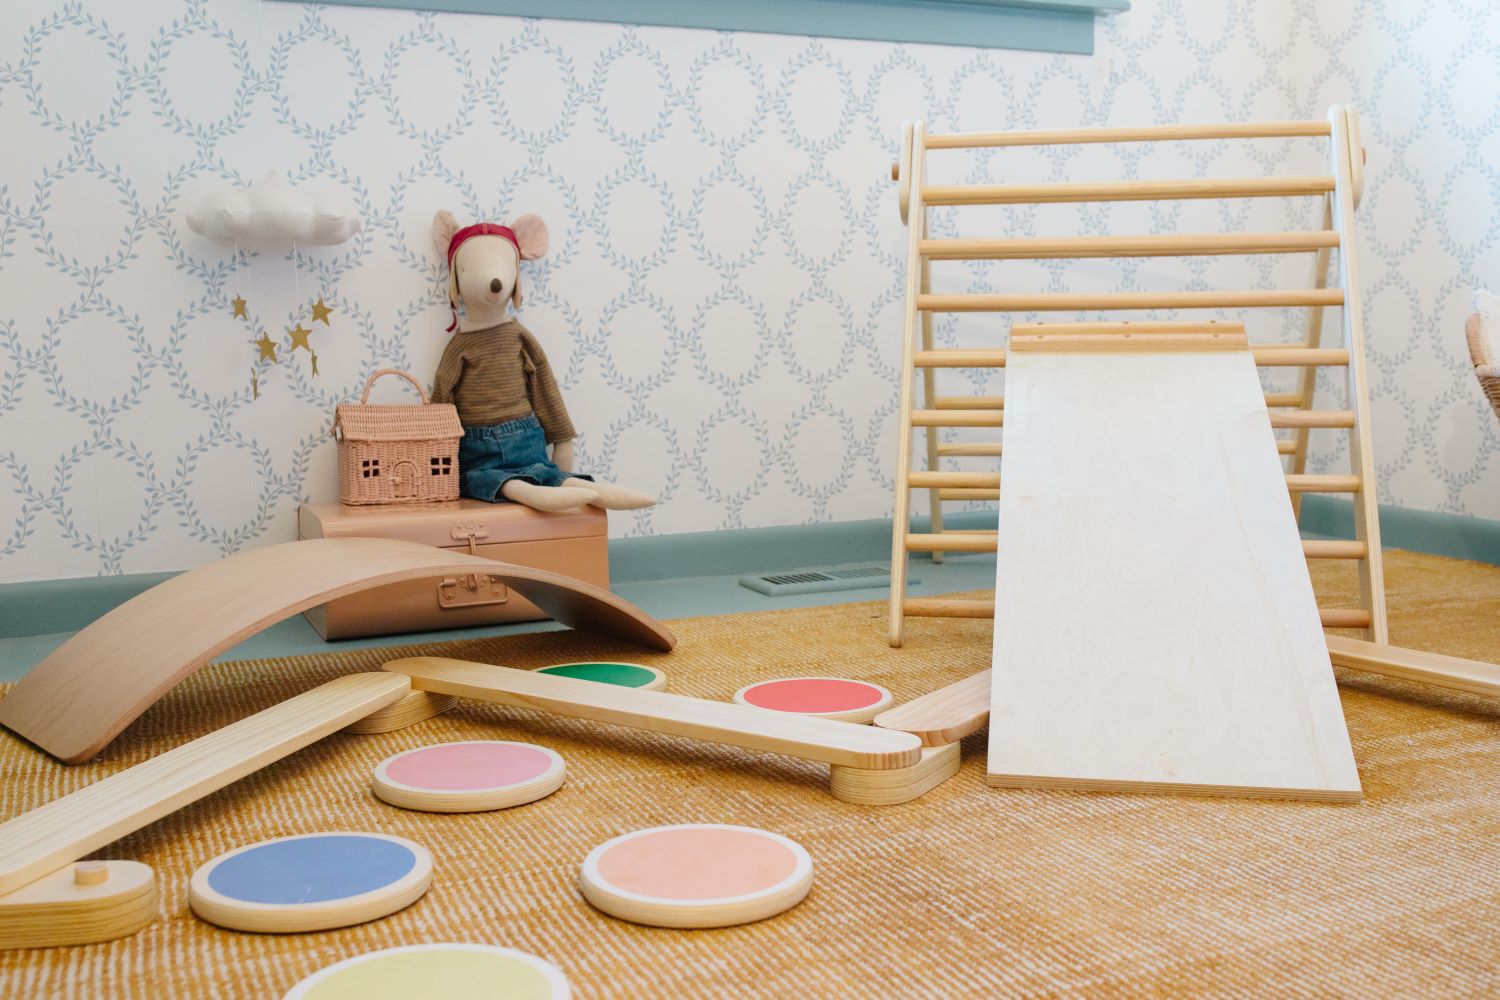 Montessori Playroom Toddler Bedroom Ideas, playroom organization, playroom organization ideas